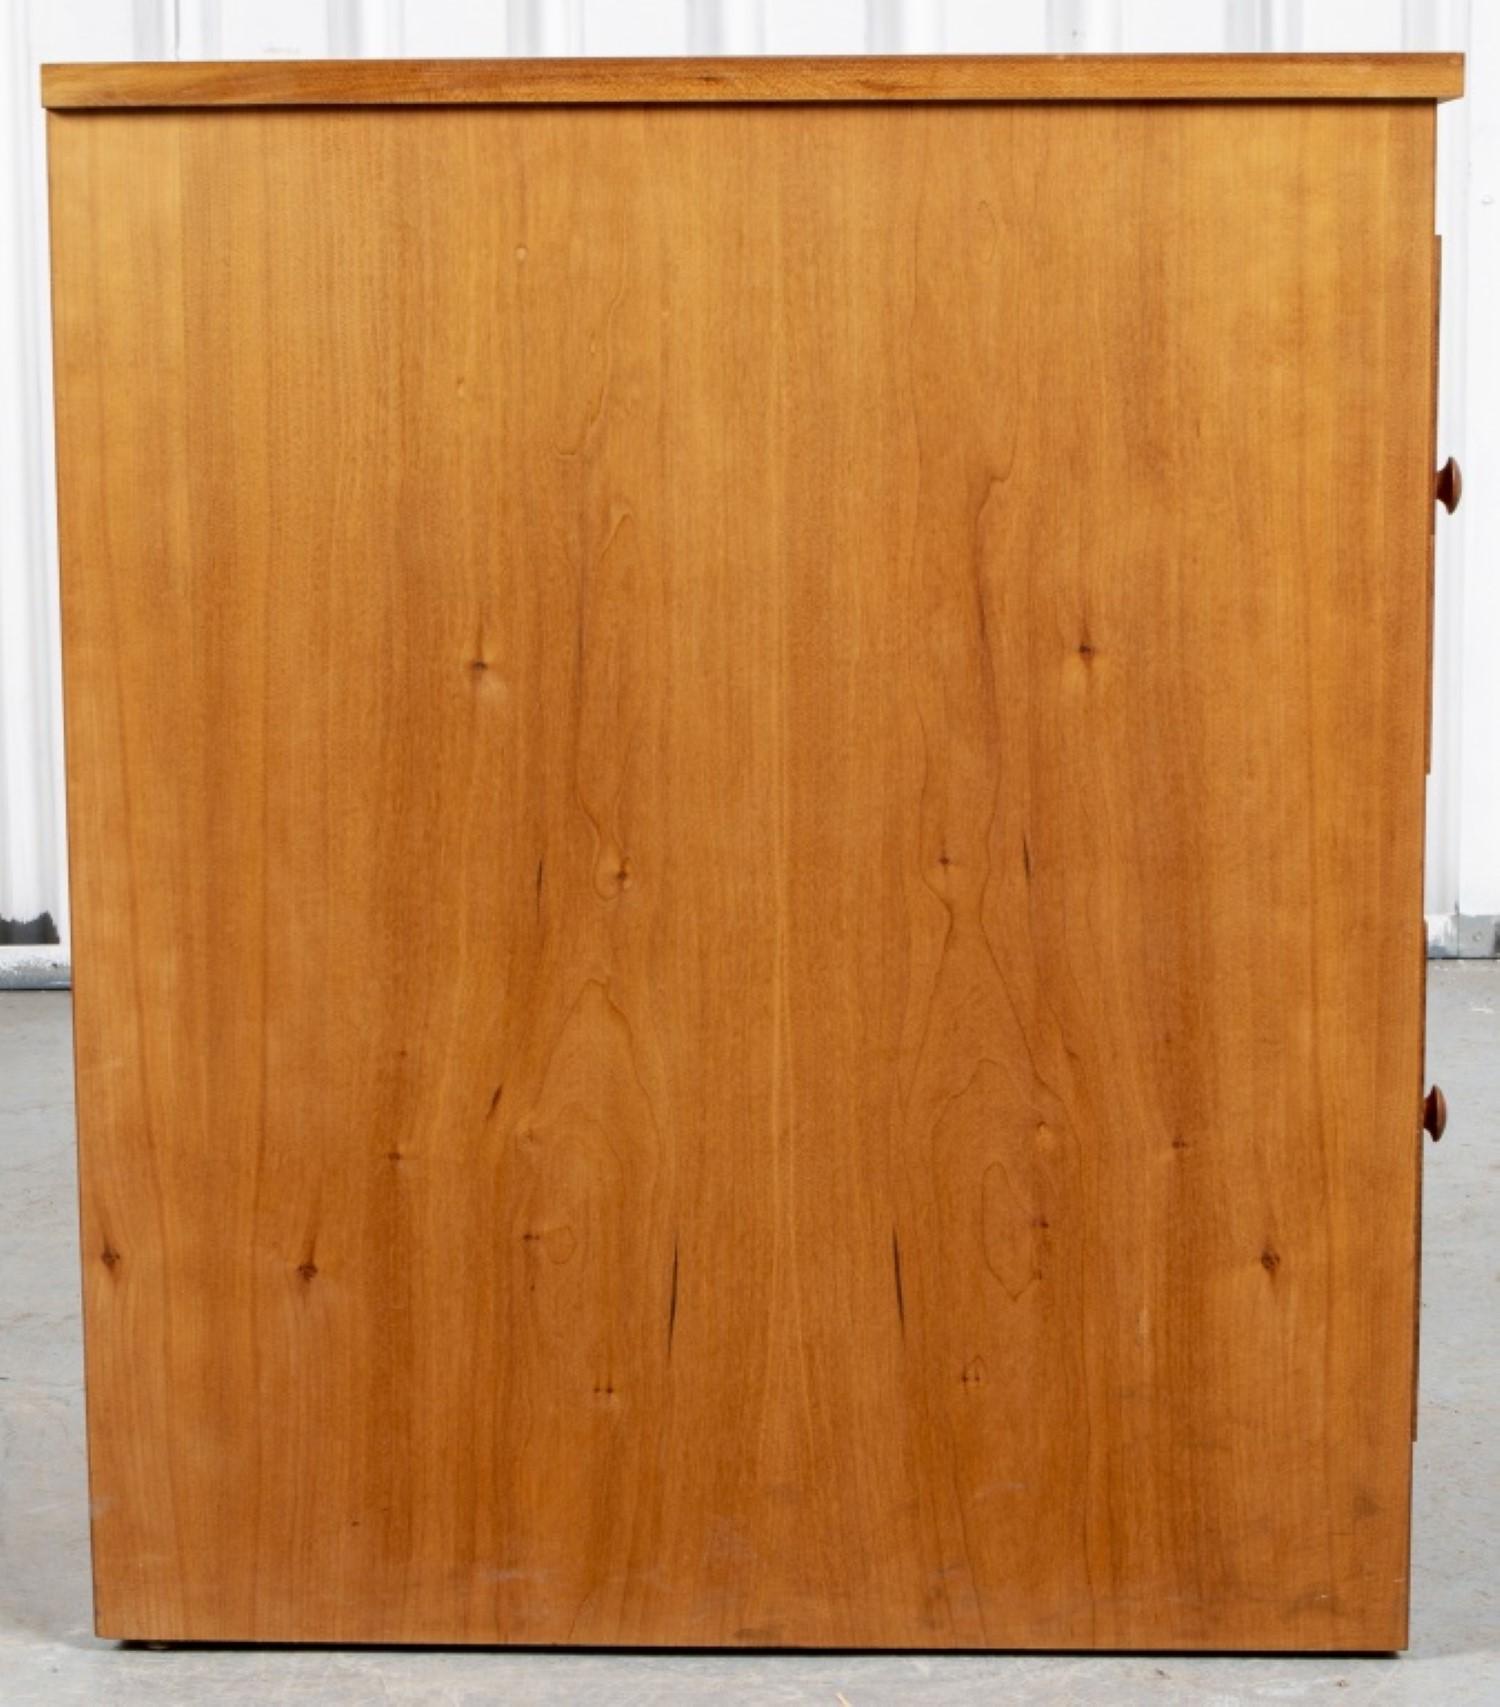 Wood Oak Two Drawer File Cabinet